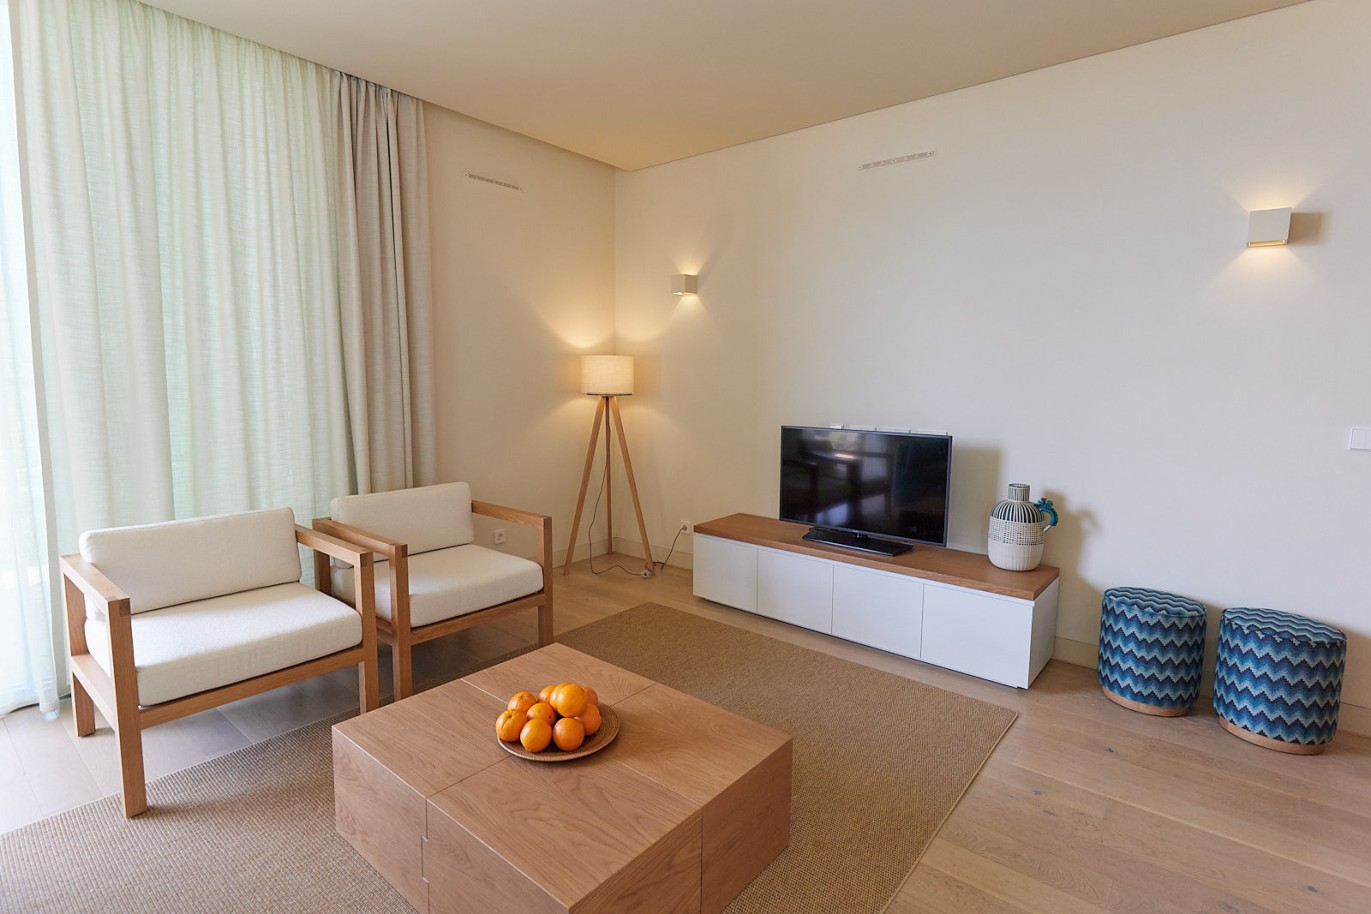 2 bedroom apartment in resort, for sale in Porches, Algarve_229197